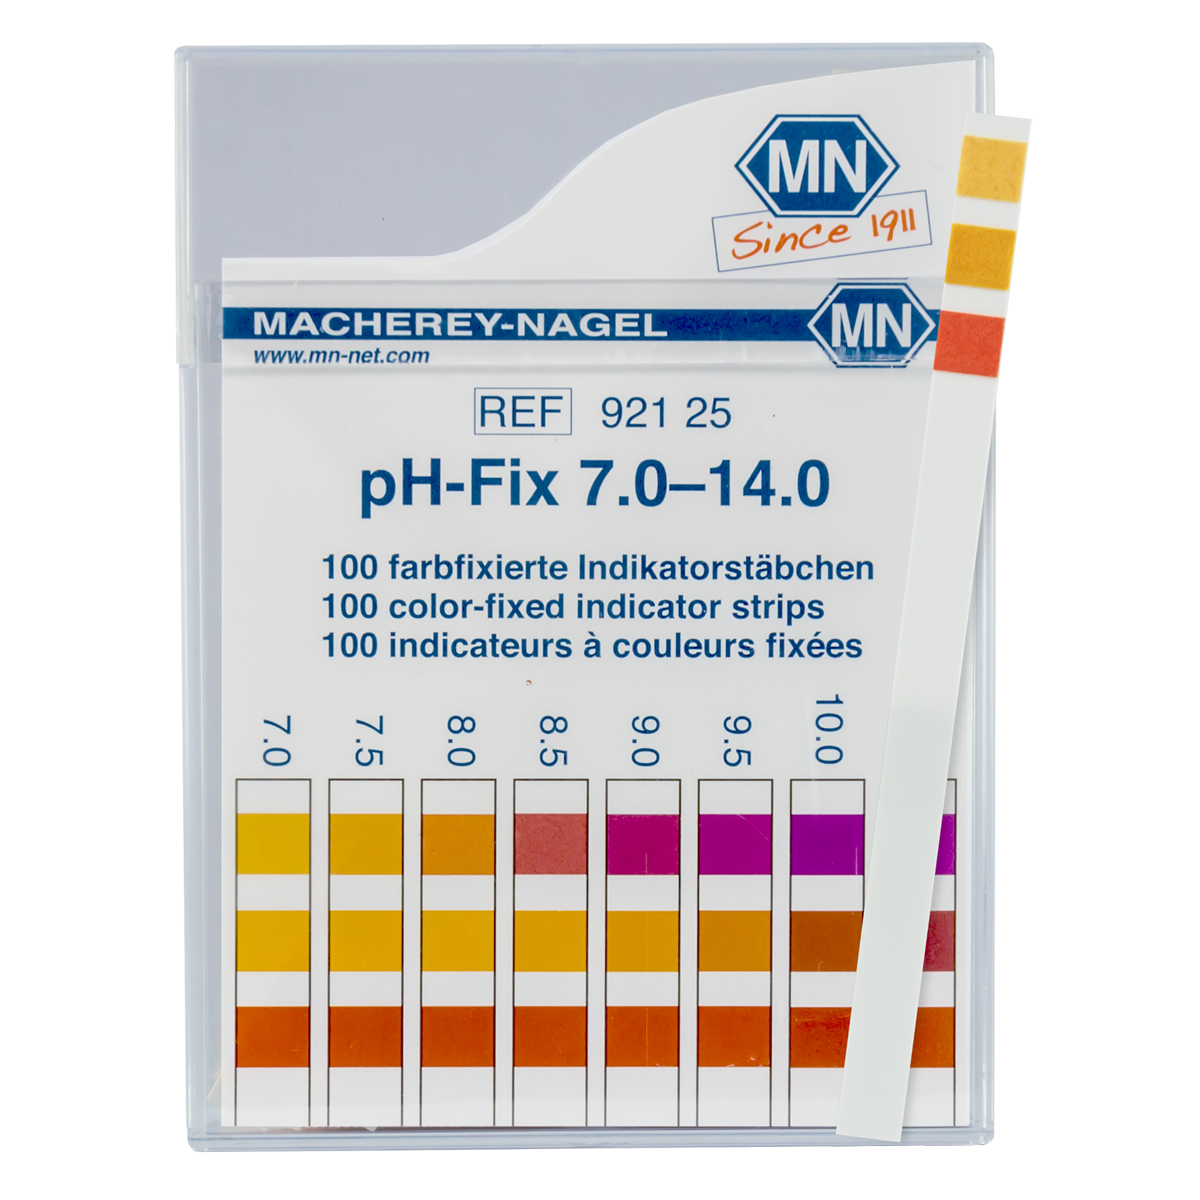 BANDELETTE pH FIX 7.0-14.0 NON MIGRANTE MACHEREY NAGEL® x 100 *** -  Atlantic labo ics